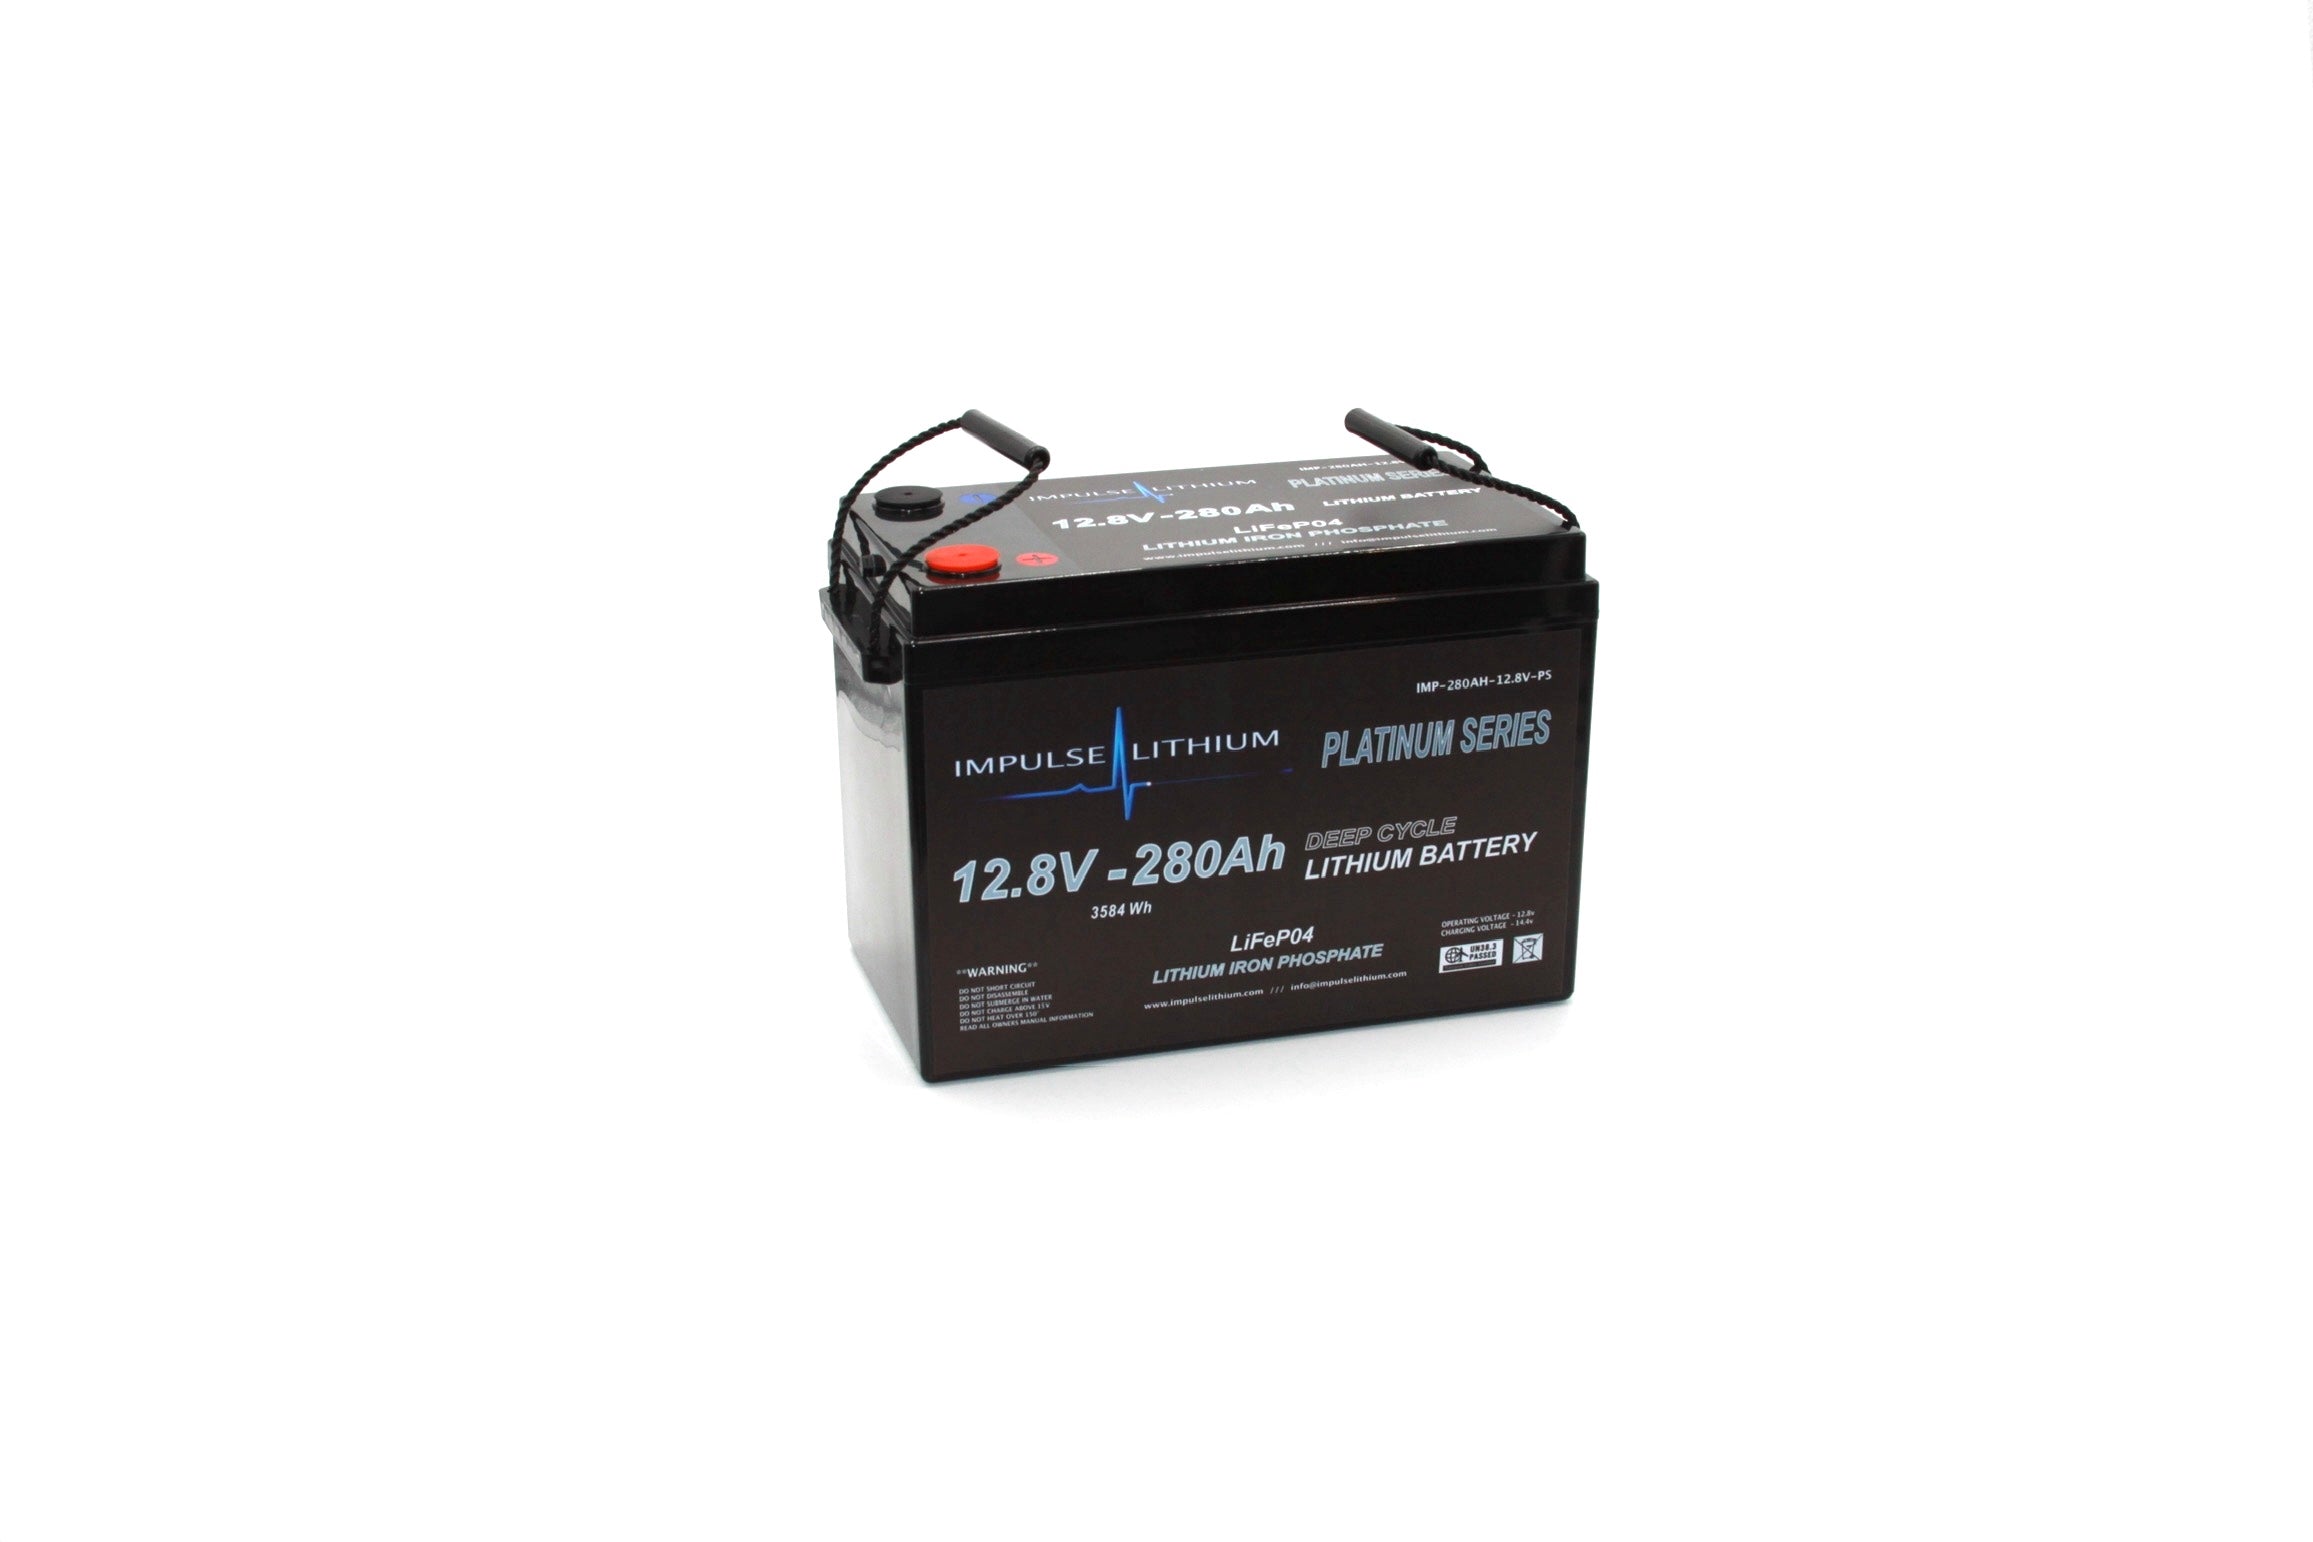 Impulse Lithium 12v-280Ah LifePO4 Lithium Battery